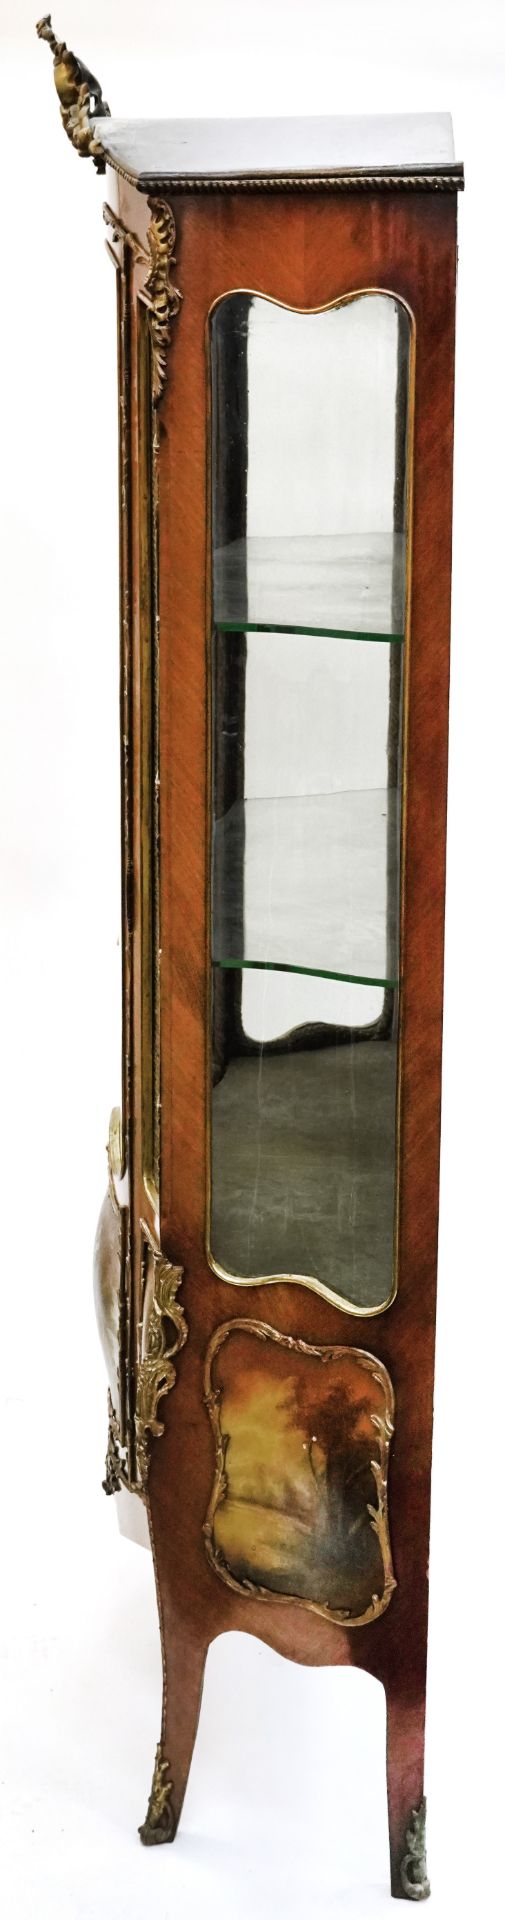 French Louis XV style ormolu mounted kingwood Bombe Vitrine having central glazed doors and side - Image 2 of 10